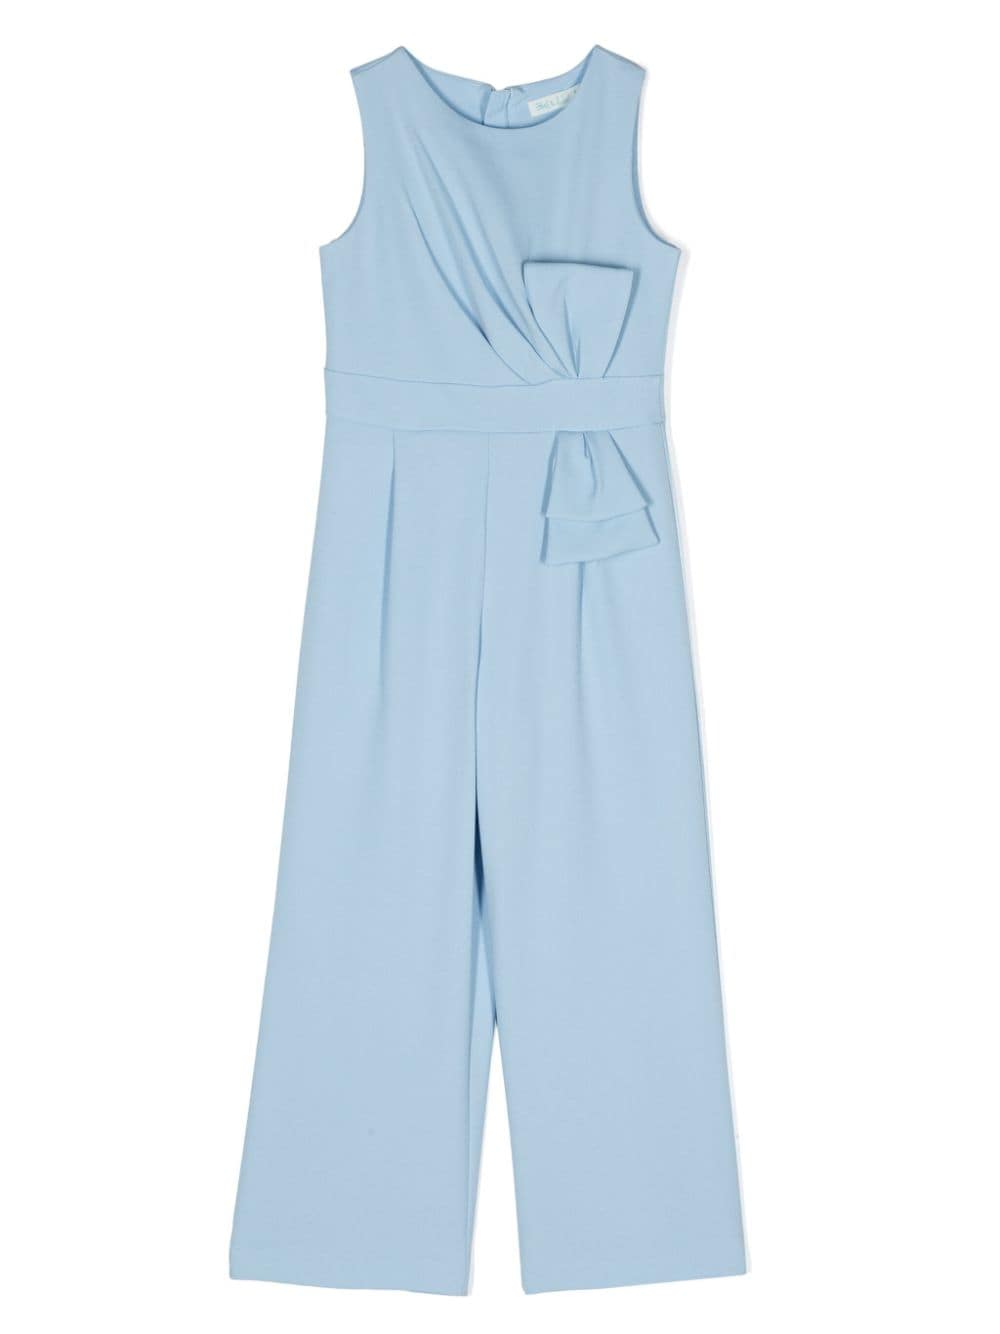 Elegant light blue outfit for girls